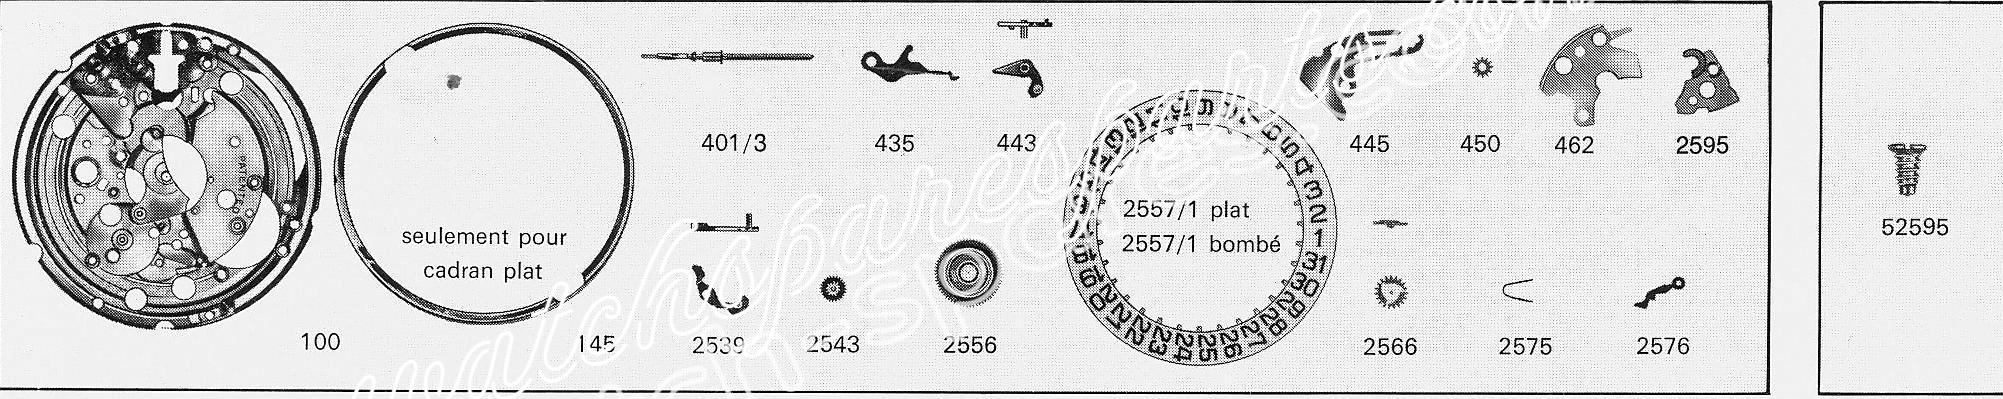 ETA 2806.1 watch date spare parts